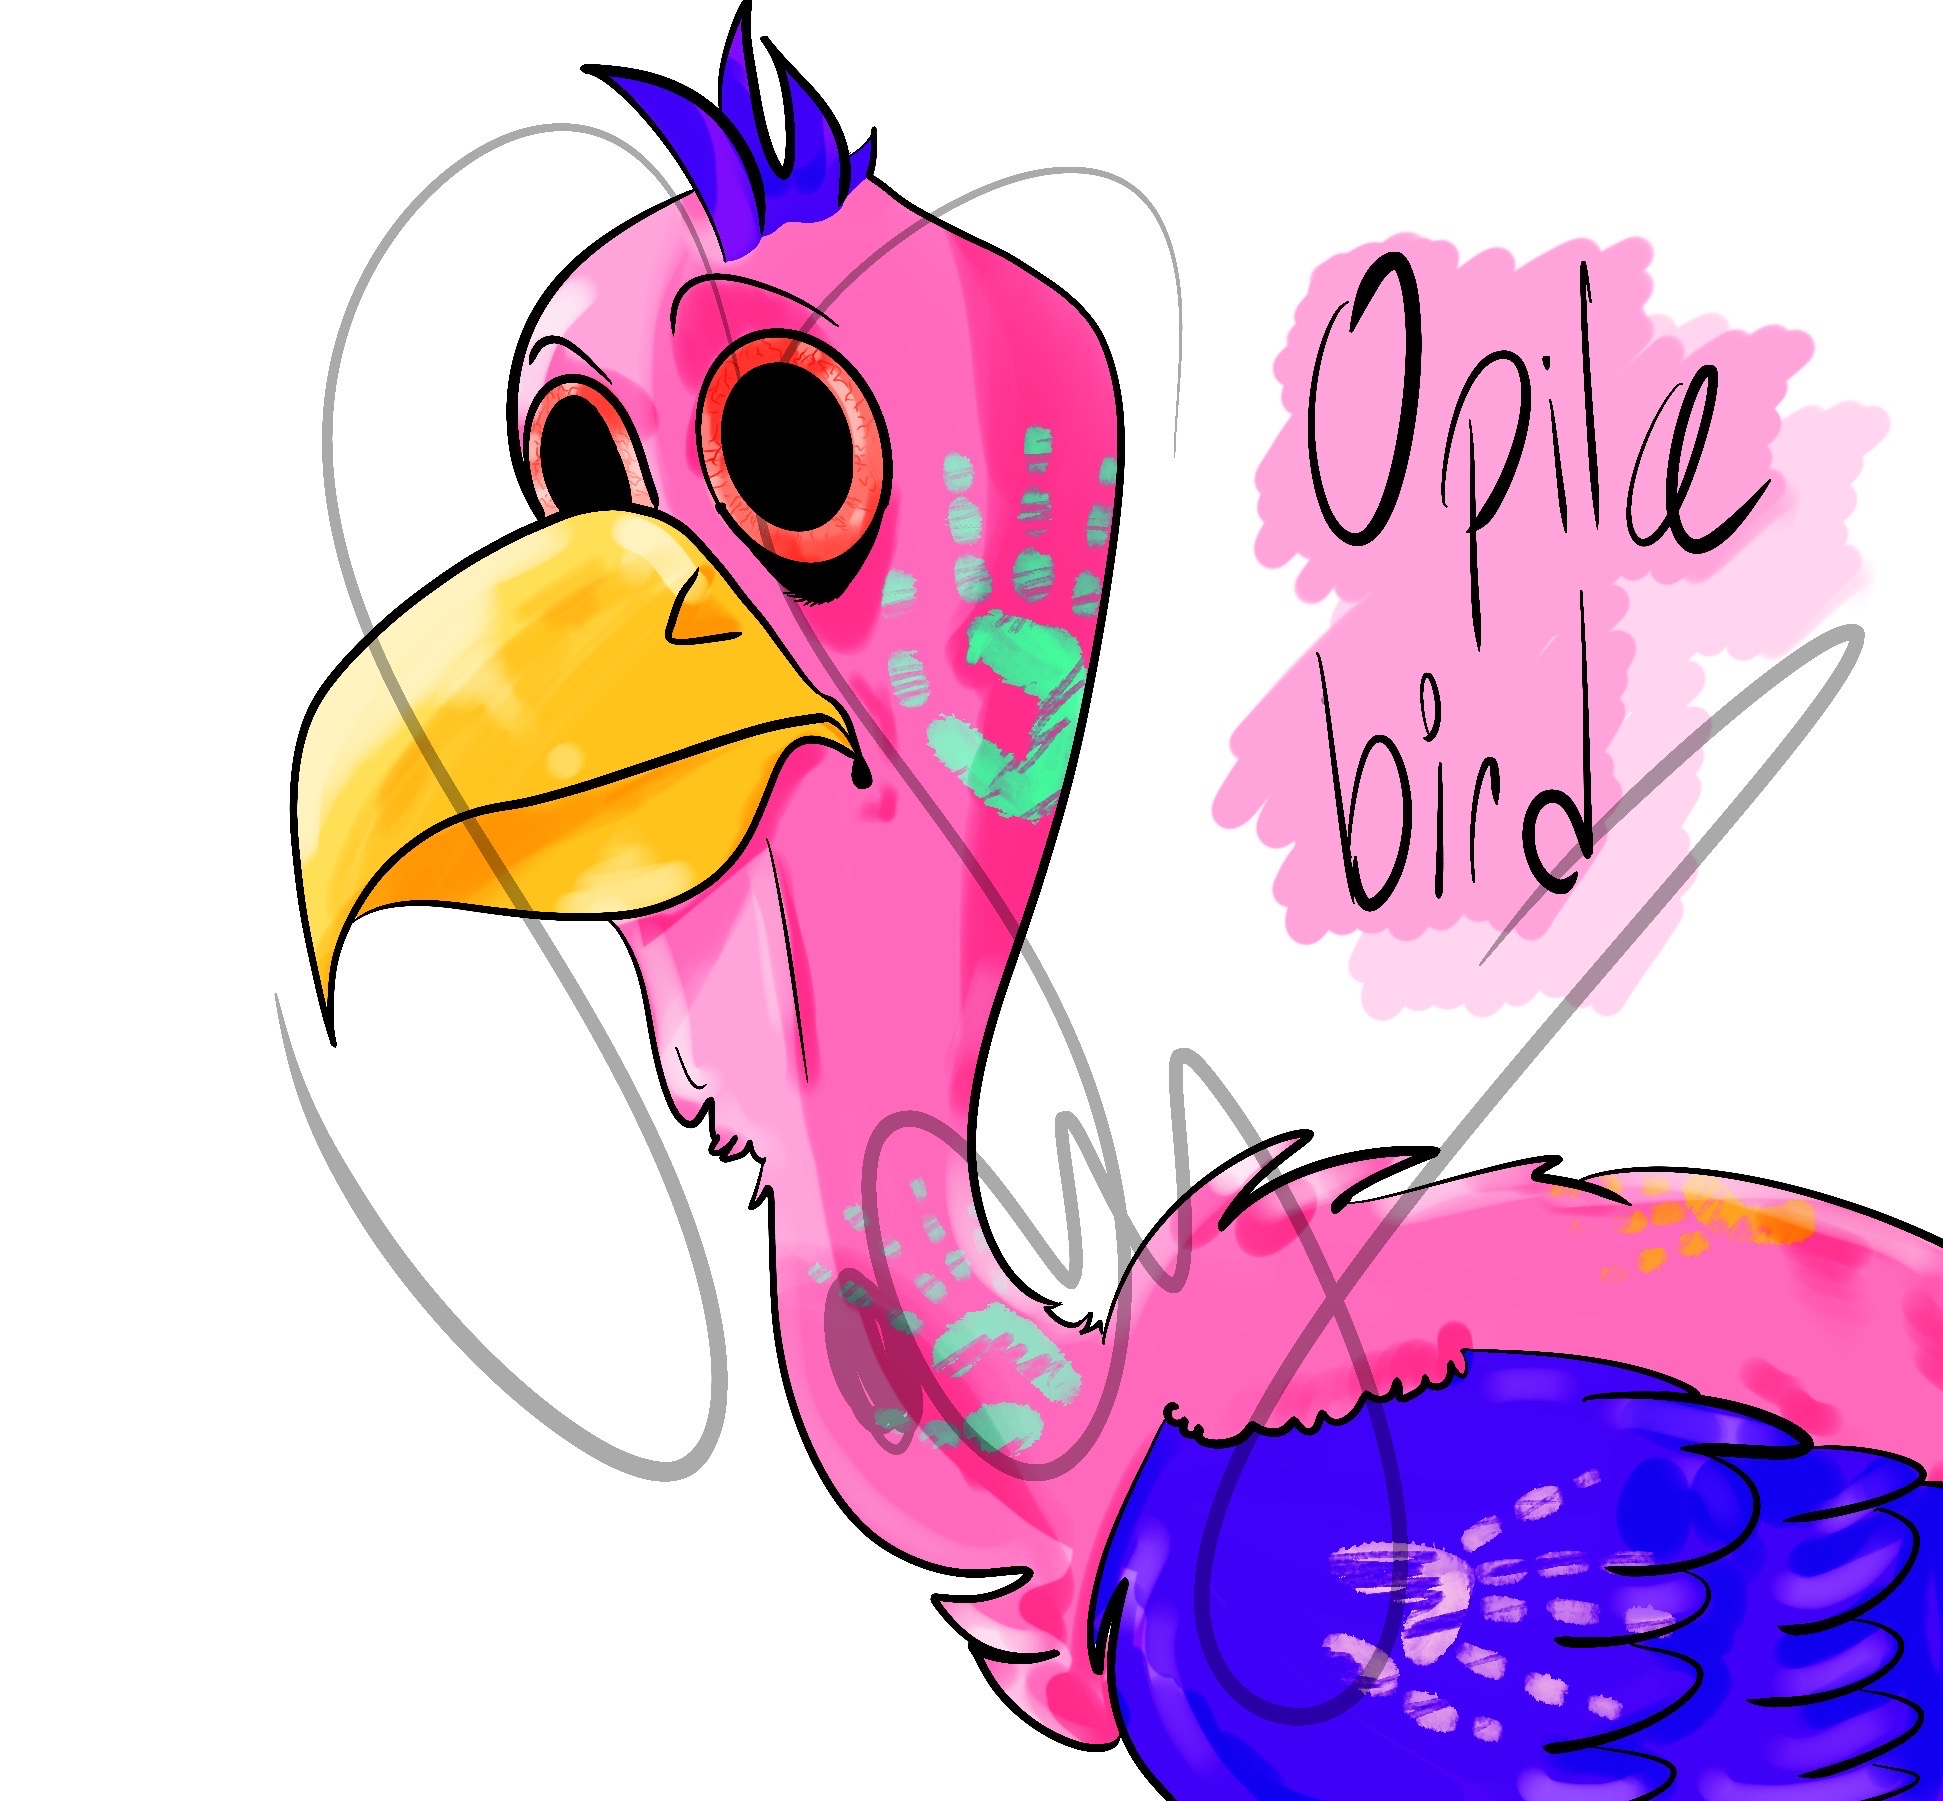 Opila Bird Stare by QueenBeeAng on DeviantArt